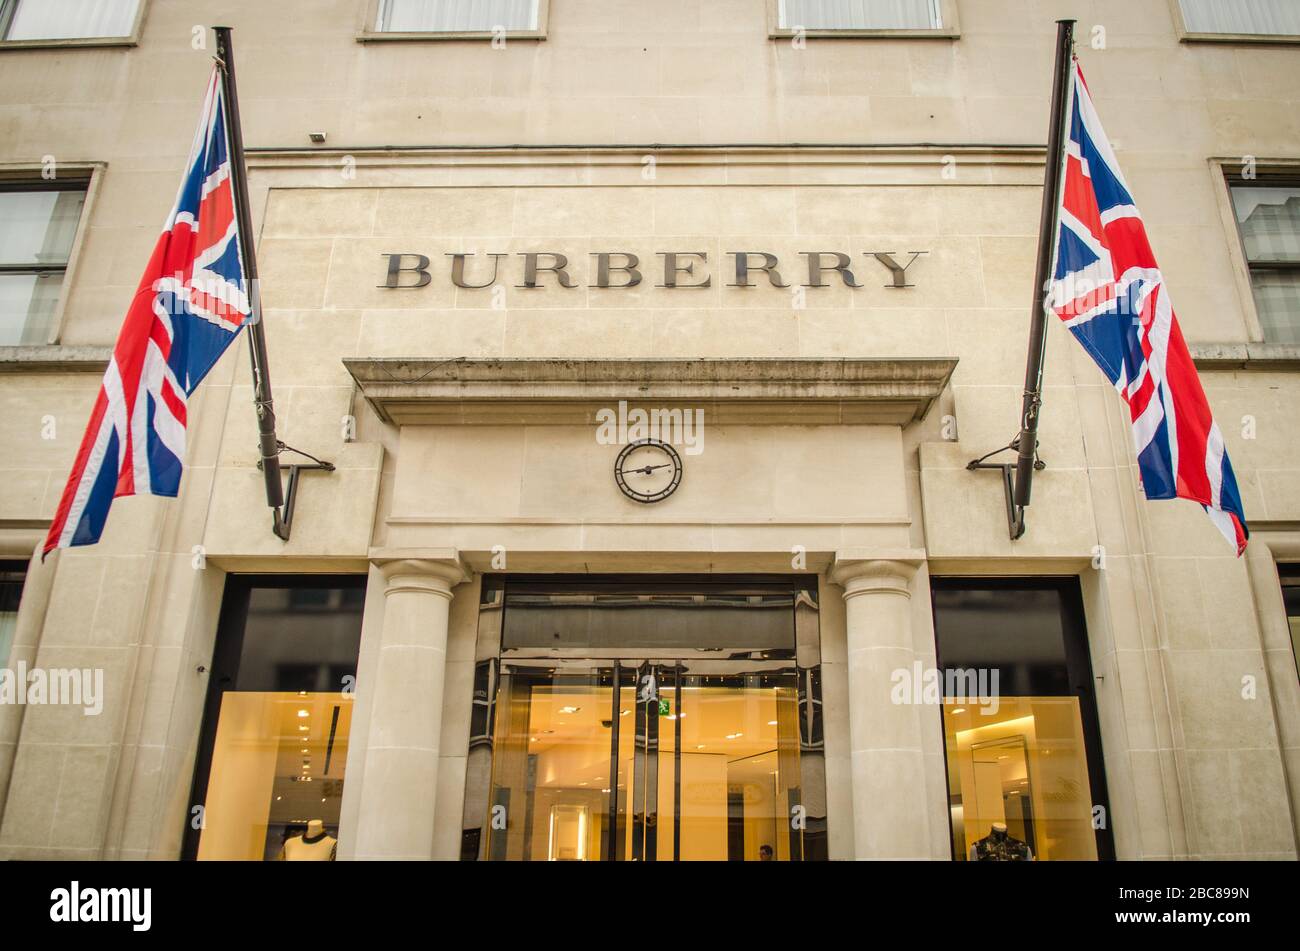 Burberry store, a British luxury retail brand, exterior logo / signage- London Stock Photo